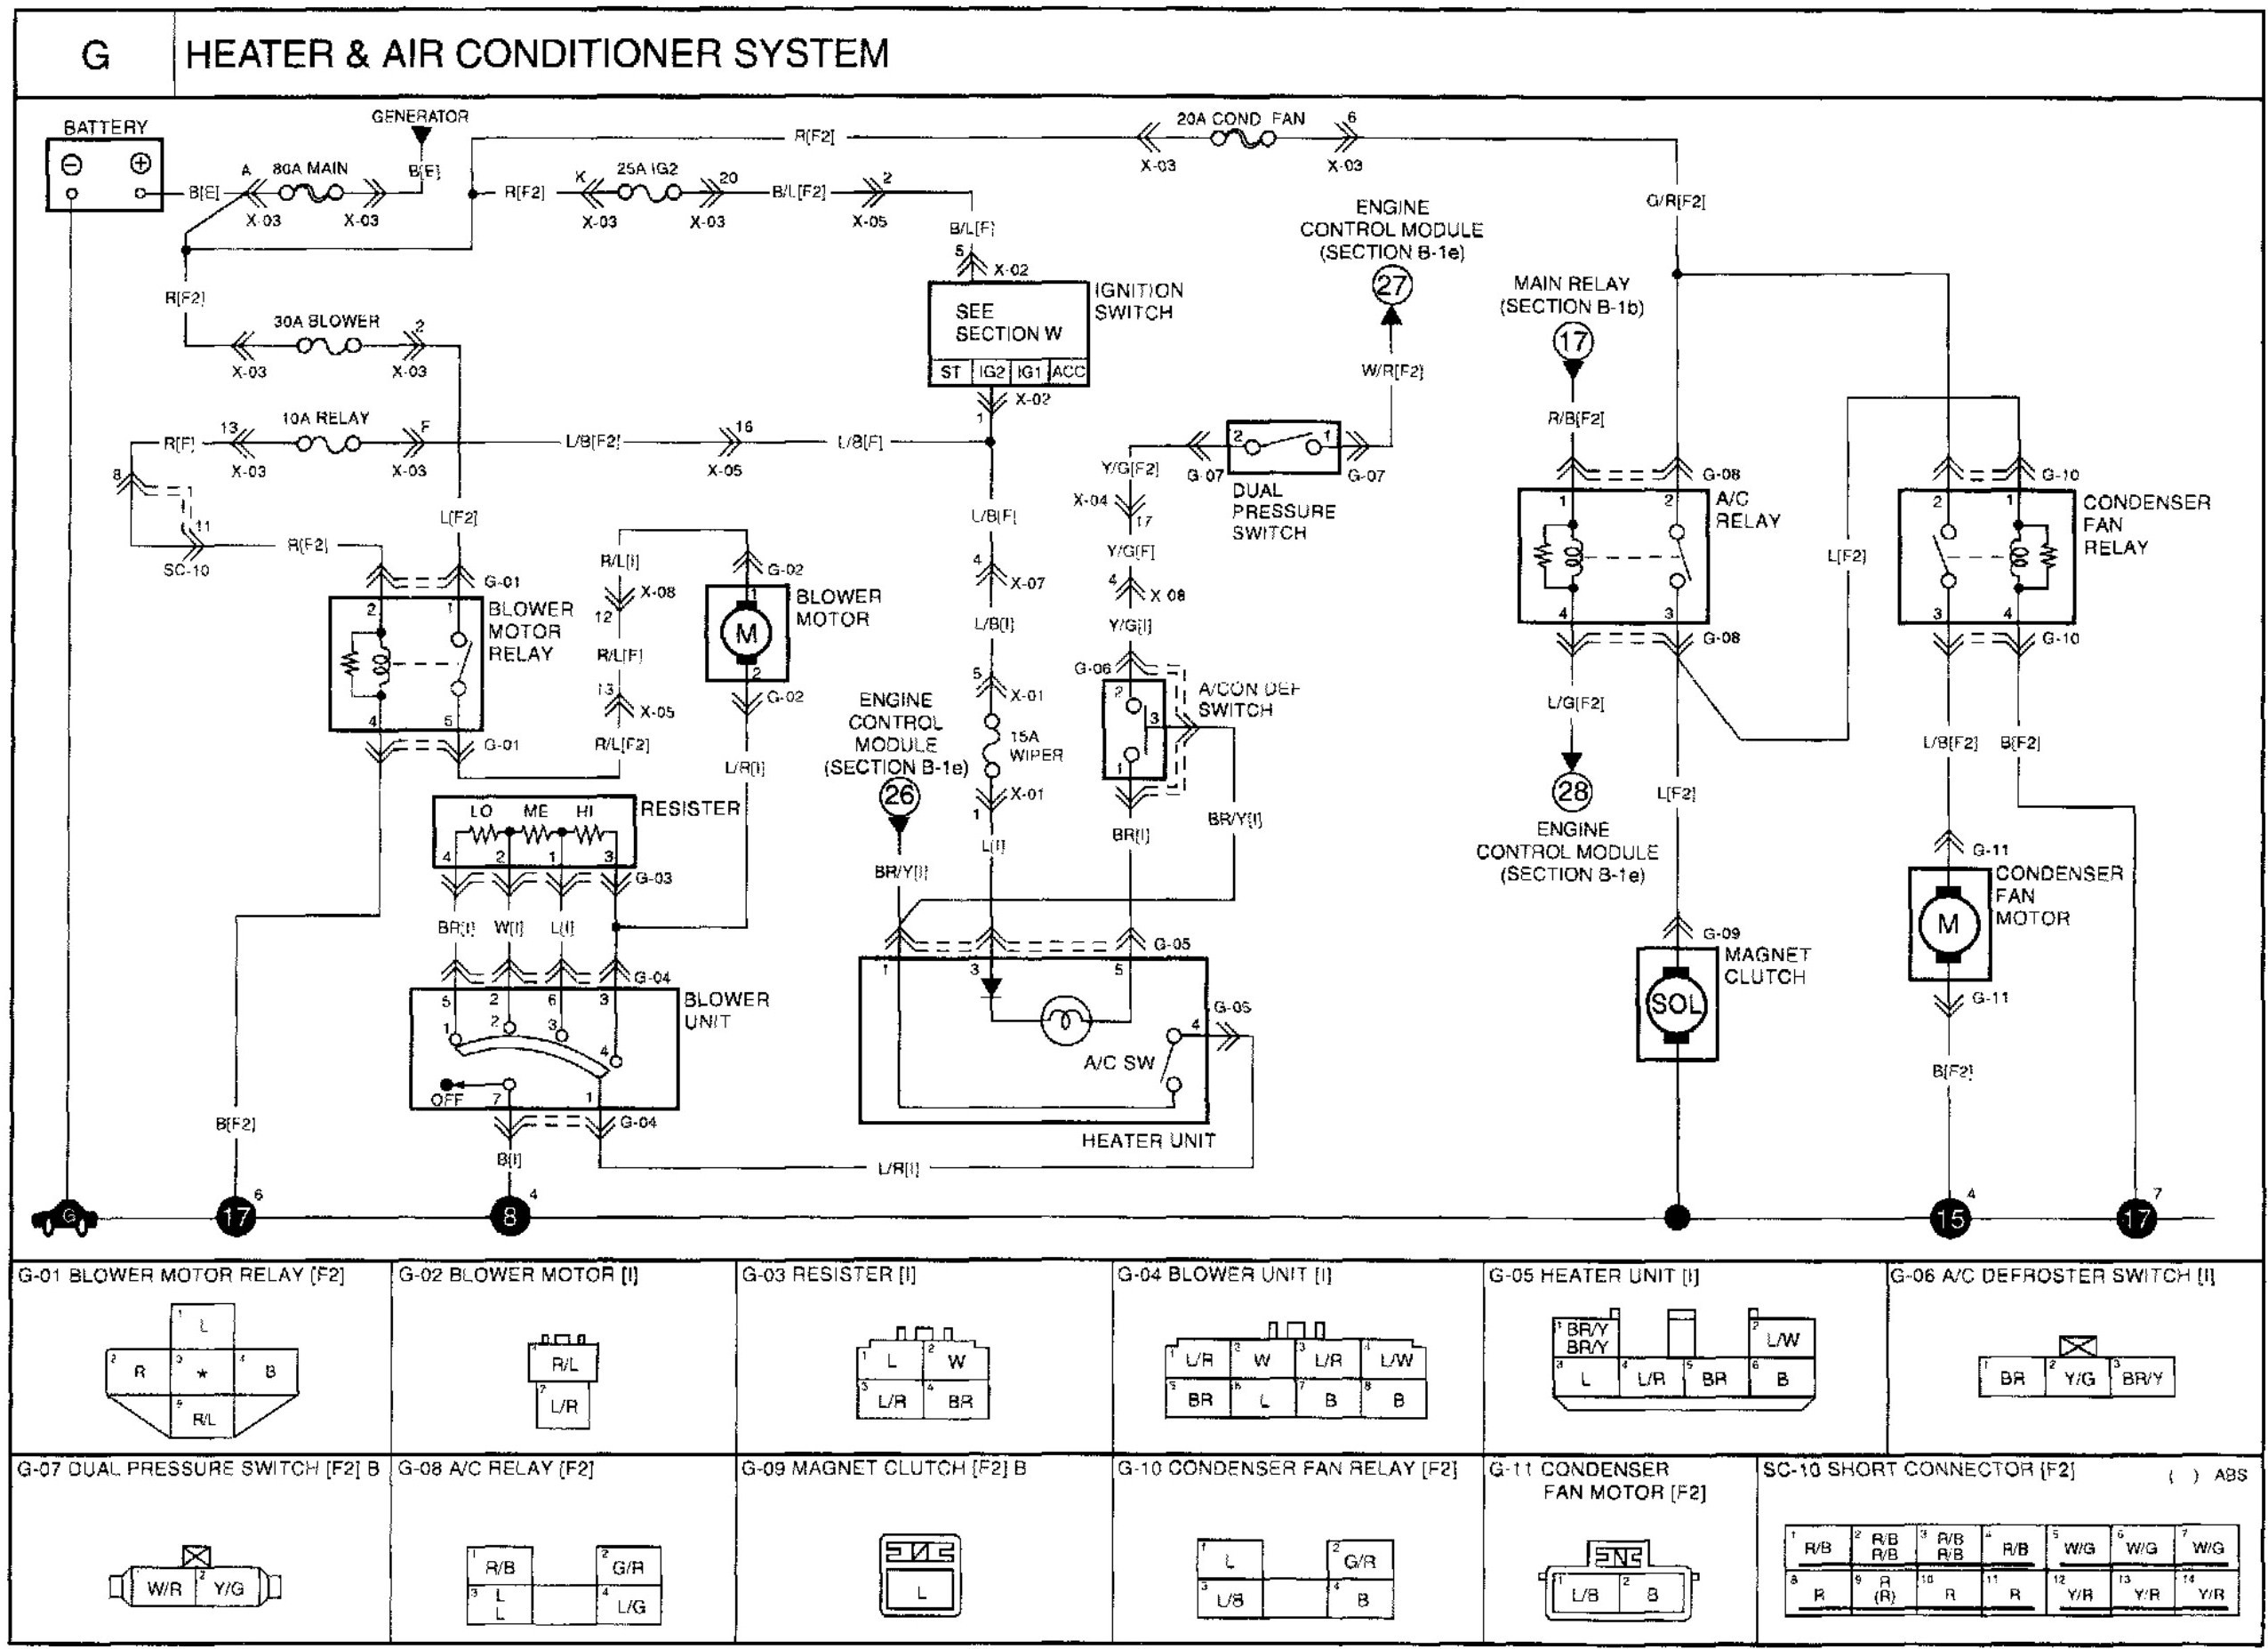 2004 Kia Amanti Engine Diagram 250 Ignition Wiring Diagram 2002 Kia Rio Engine Diagram Chevy Fuel Of 2004 Kia Amanti Engine Diagram